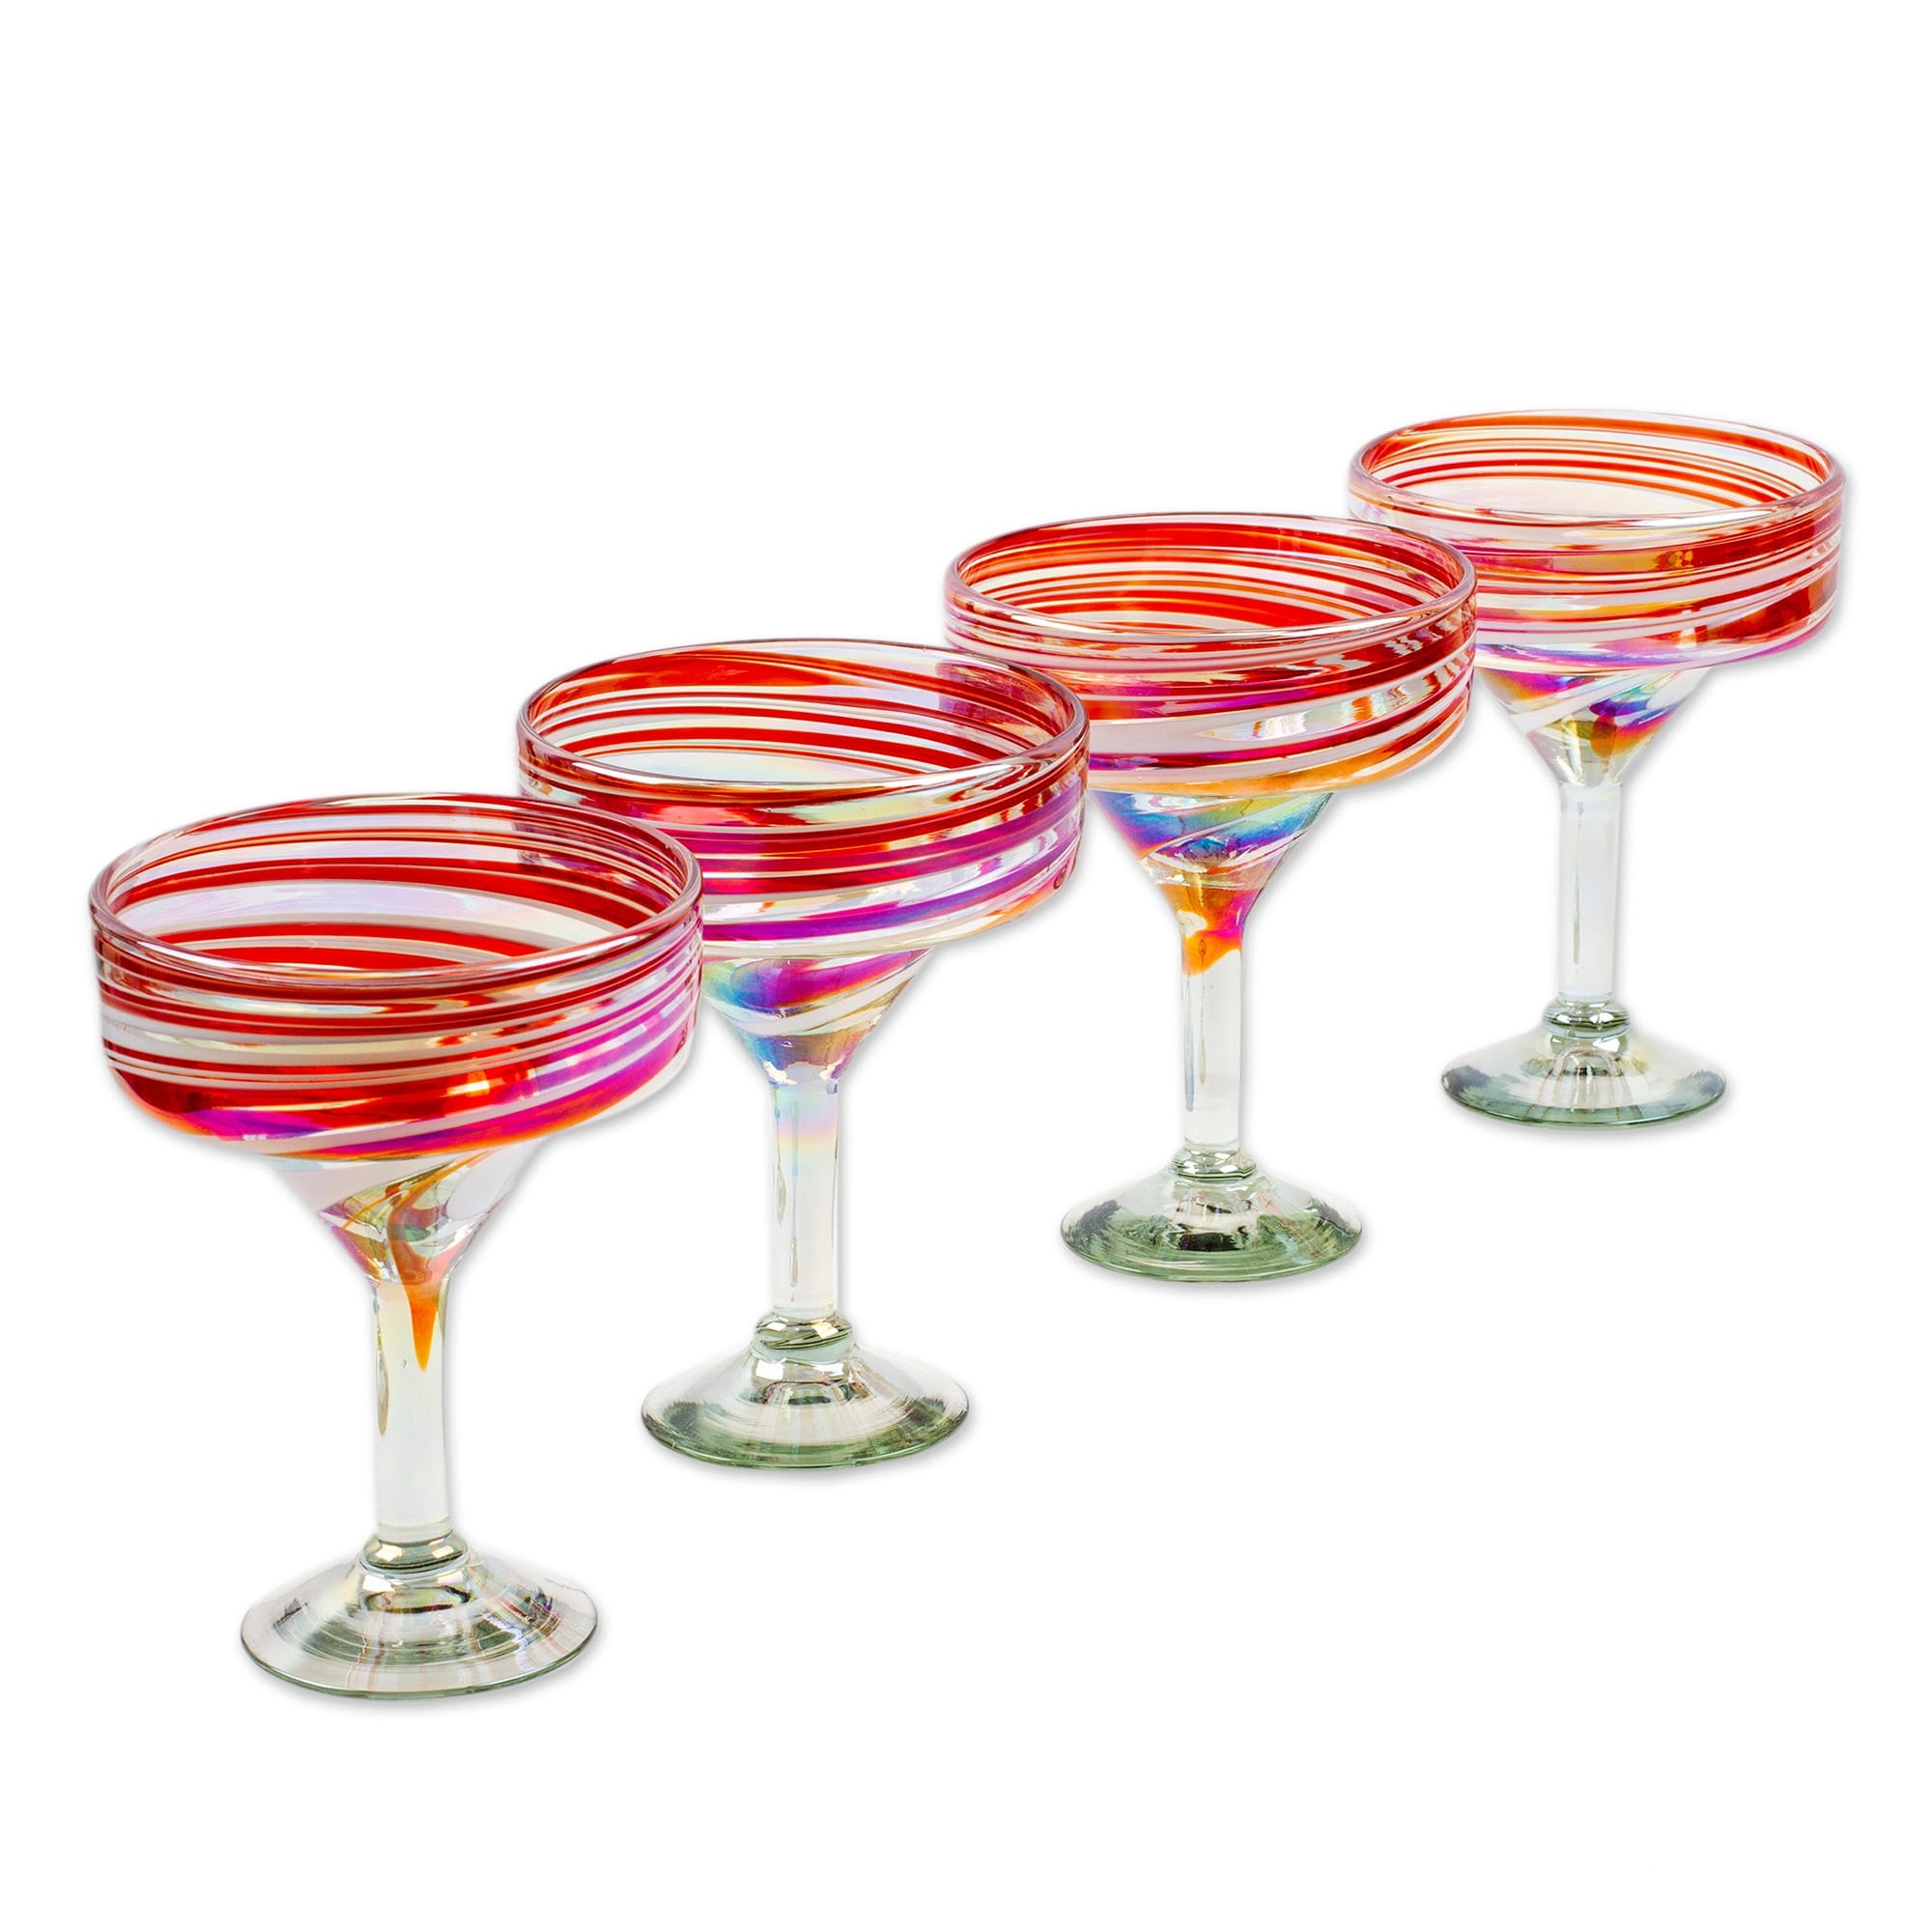 Set of 6 Handcrafted Speckled Martini Glasses Mexican Confetti Rock Design  12 Oz 